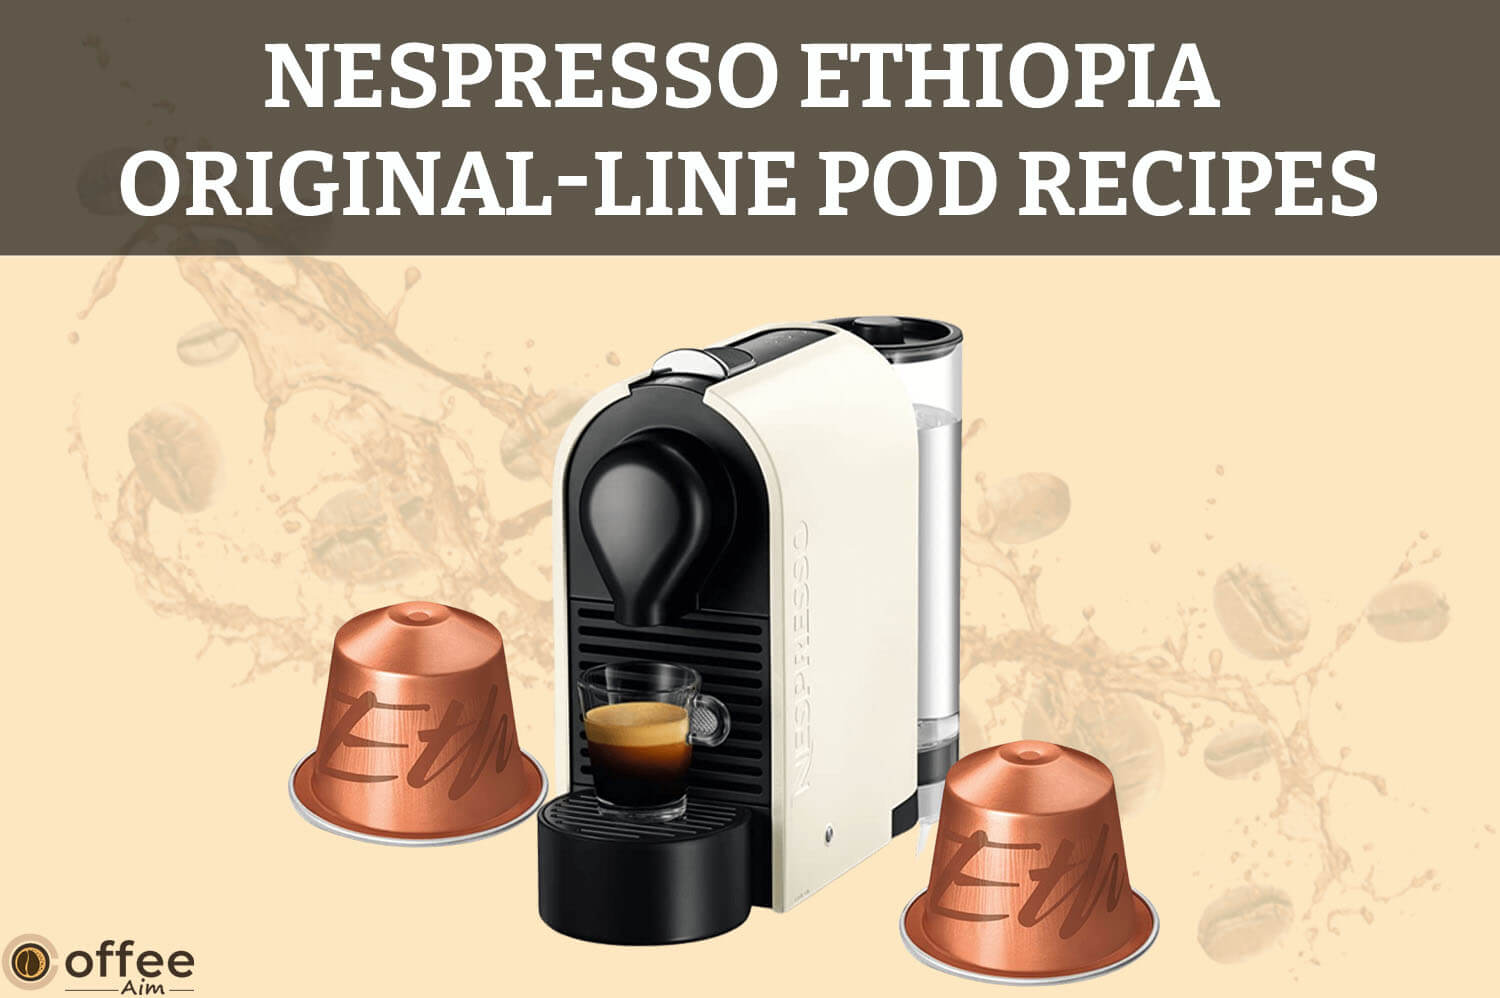 Featured image for the article "Nespresso Ethiopia OriginalLine Pod Recipes"